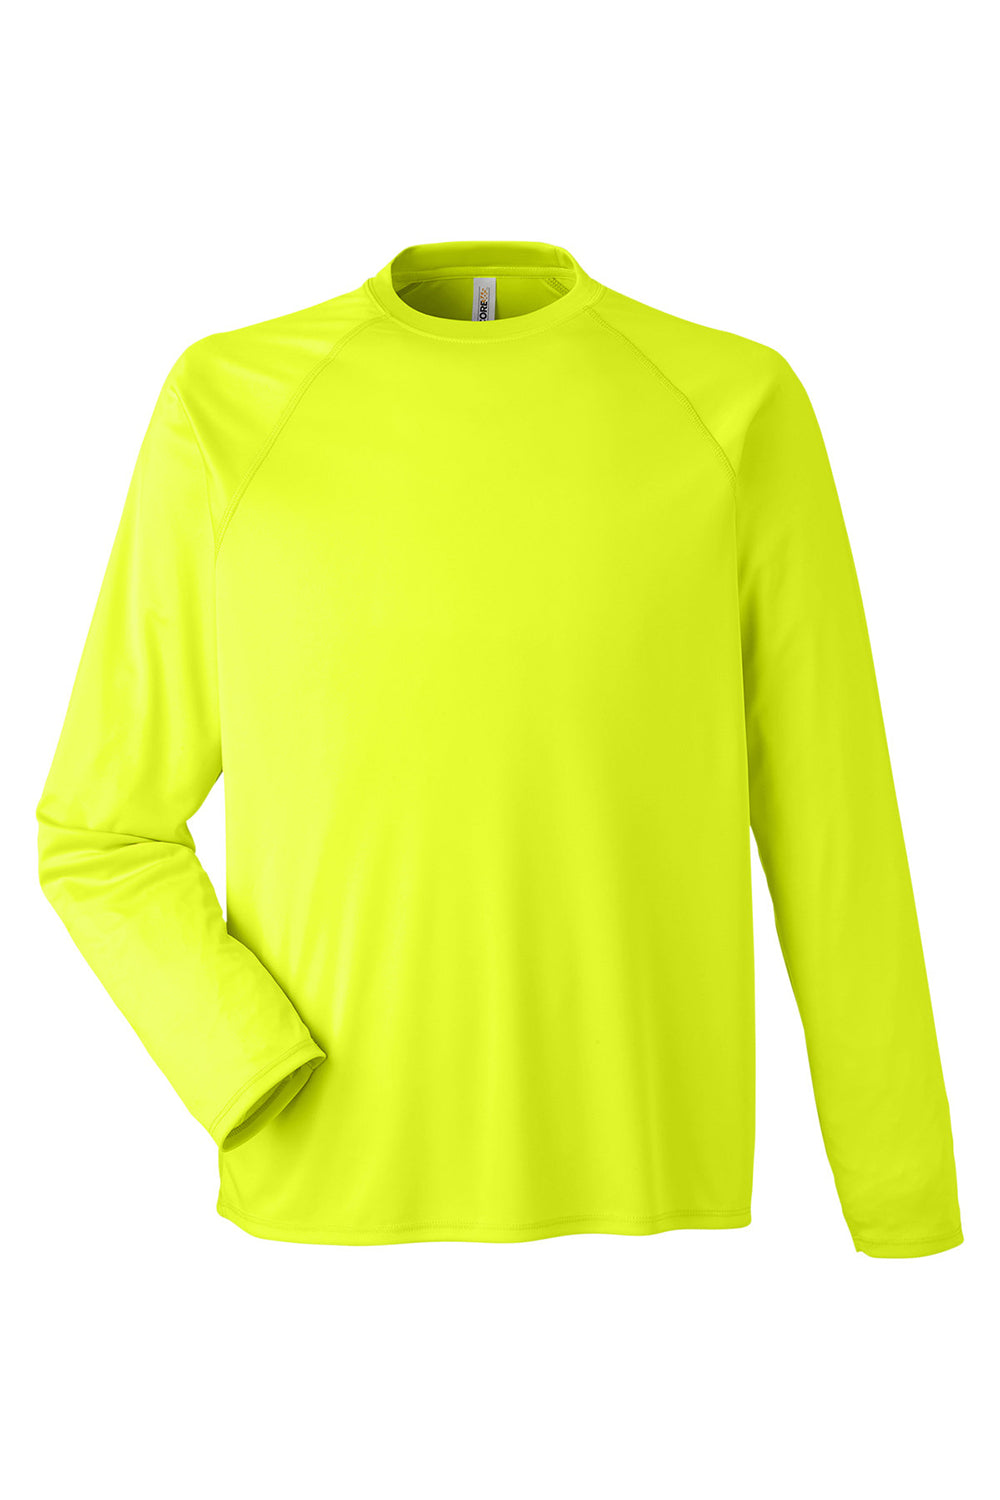 Core 365 CE110 Mens Ultra MVP Raglan Long Sleeve T-Shirt Safety Yellow Flat Front